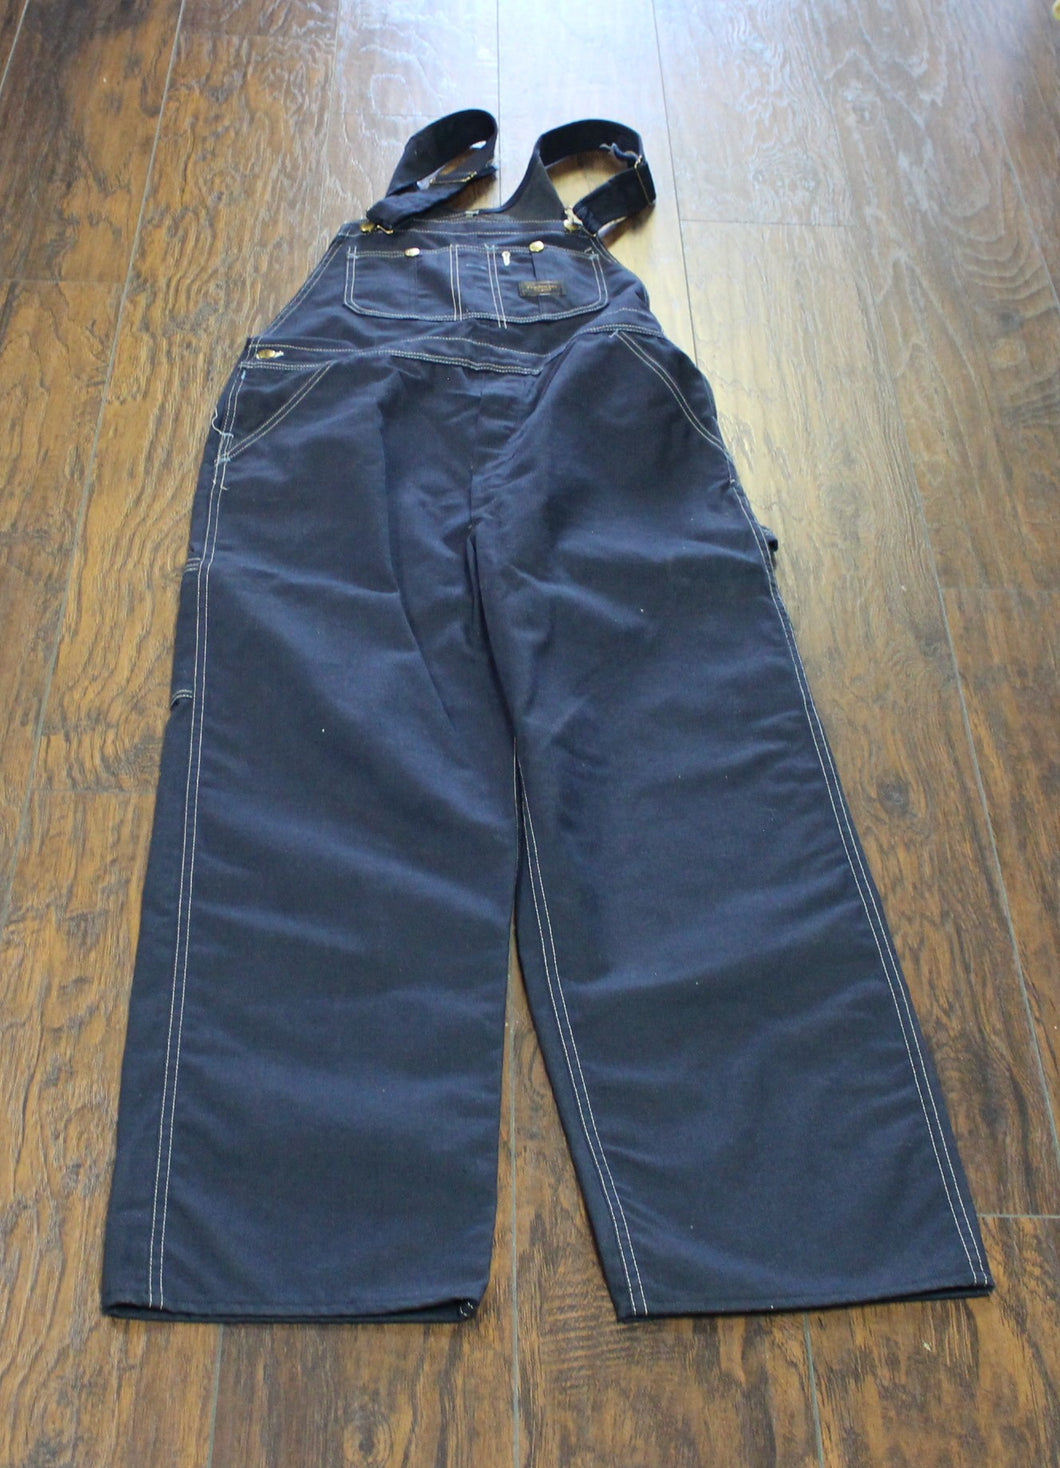 Sears Perma-Prest Tradewear Tri-Blend Overalls - Union Made - Size: 38x32 - Used